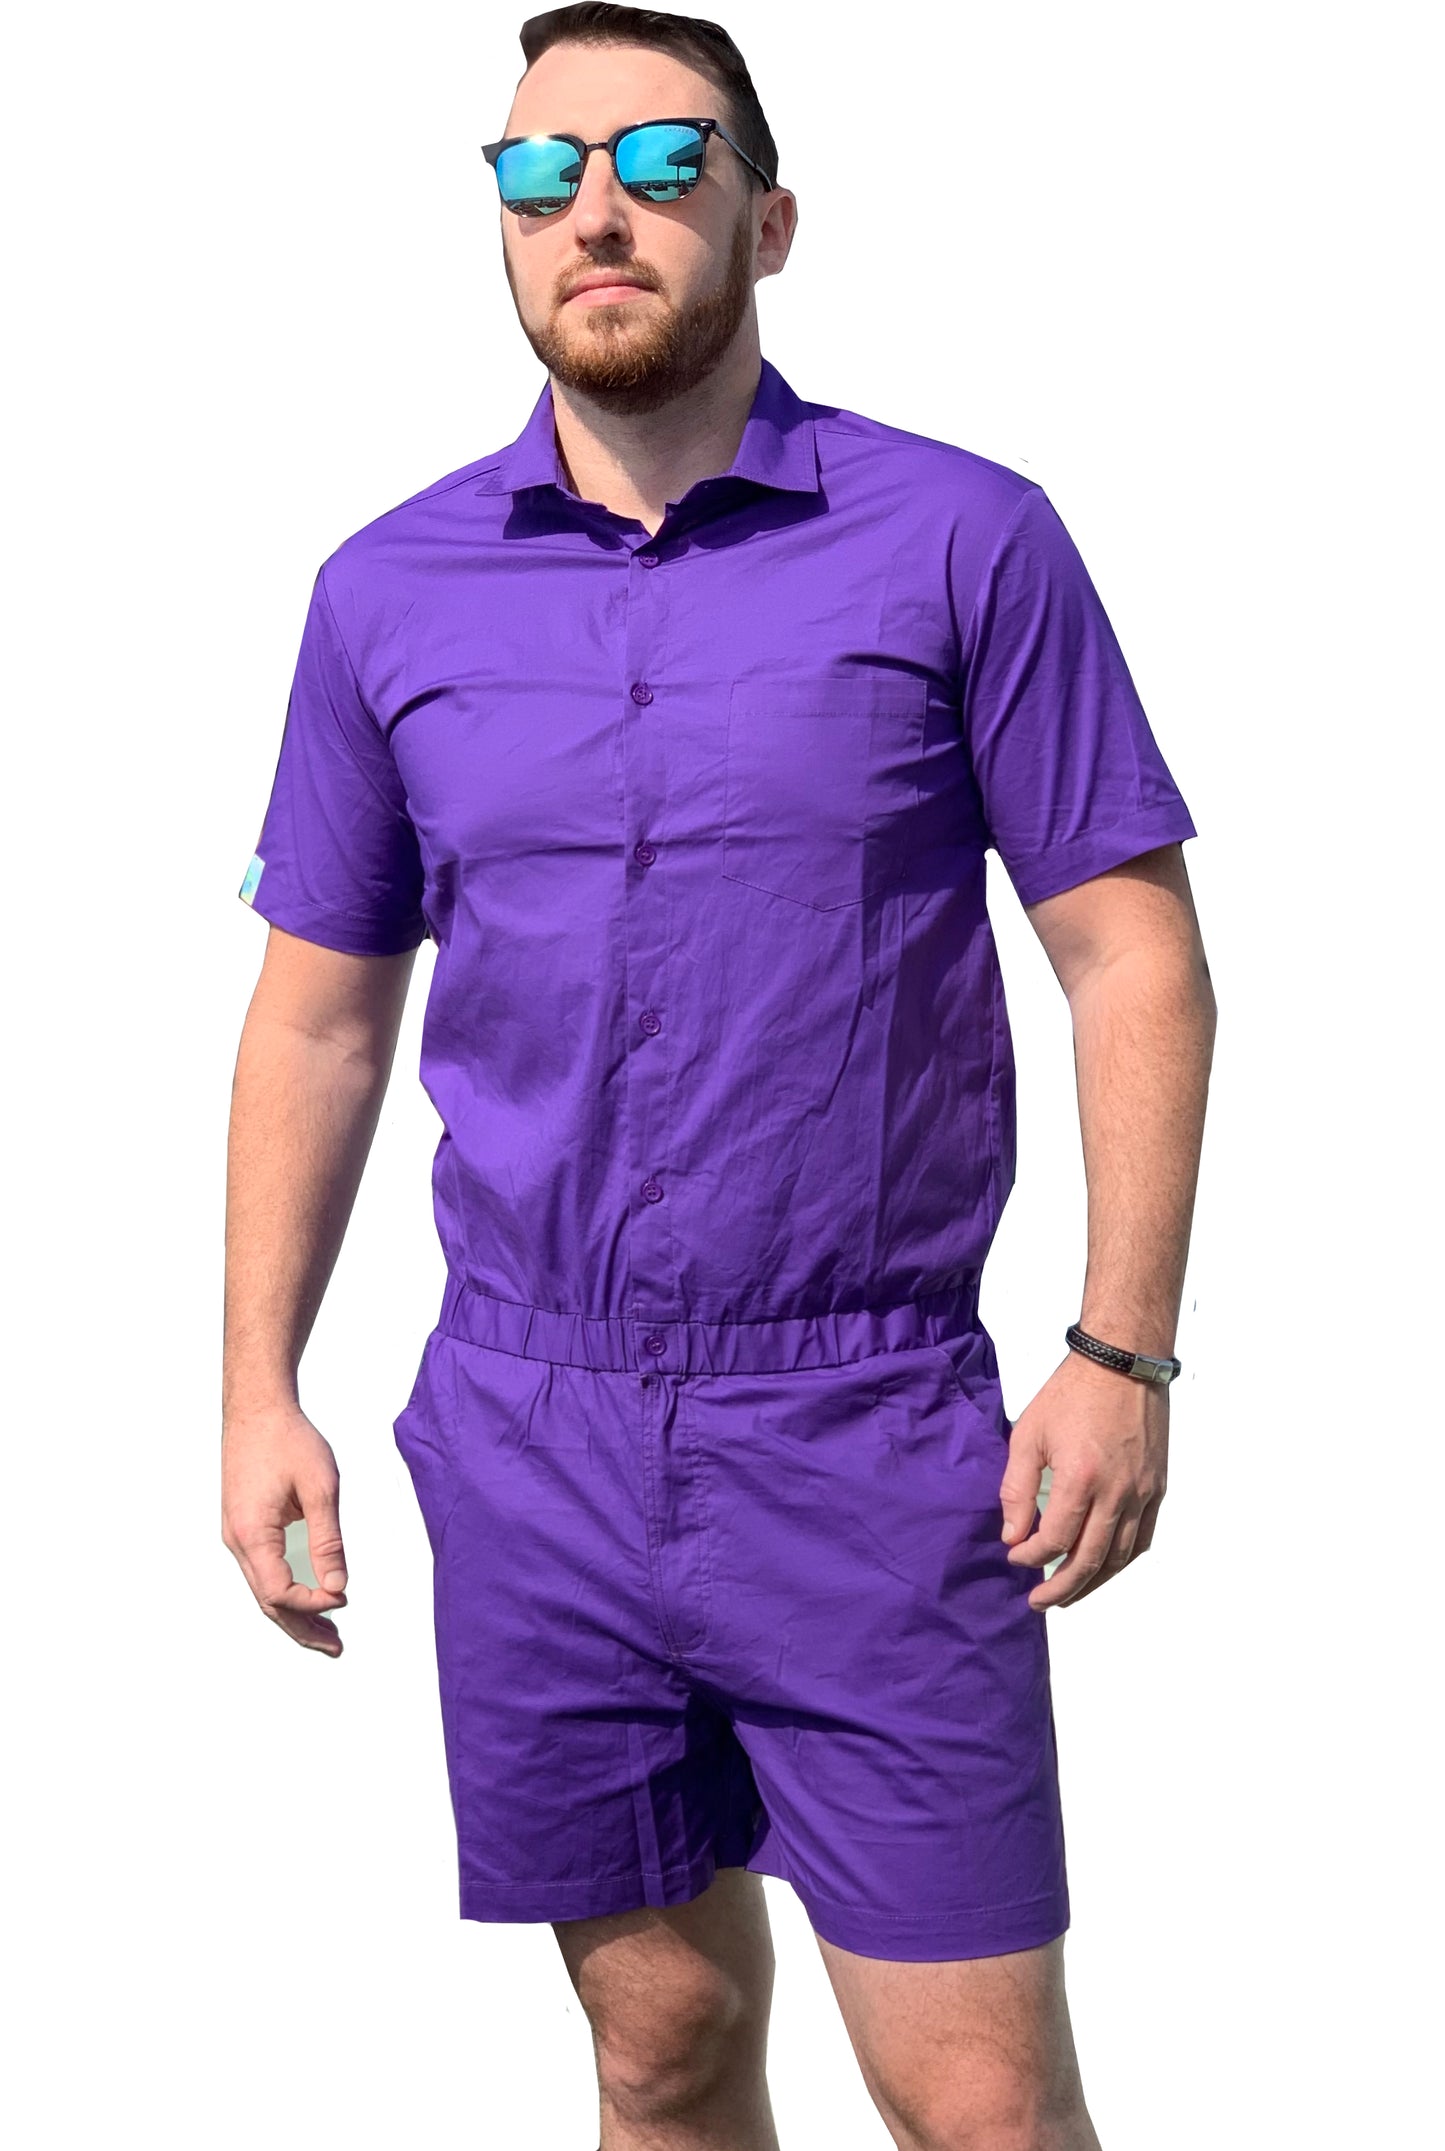 Purple male romper outfit